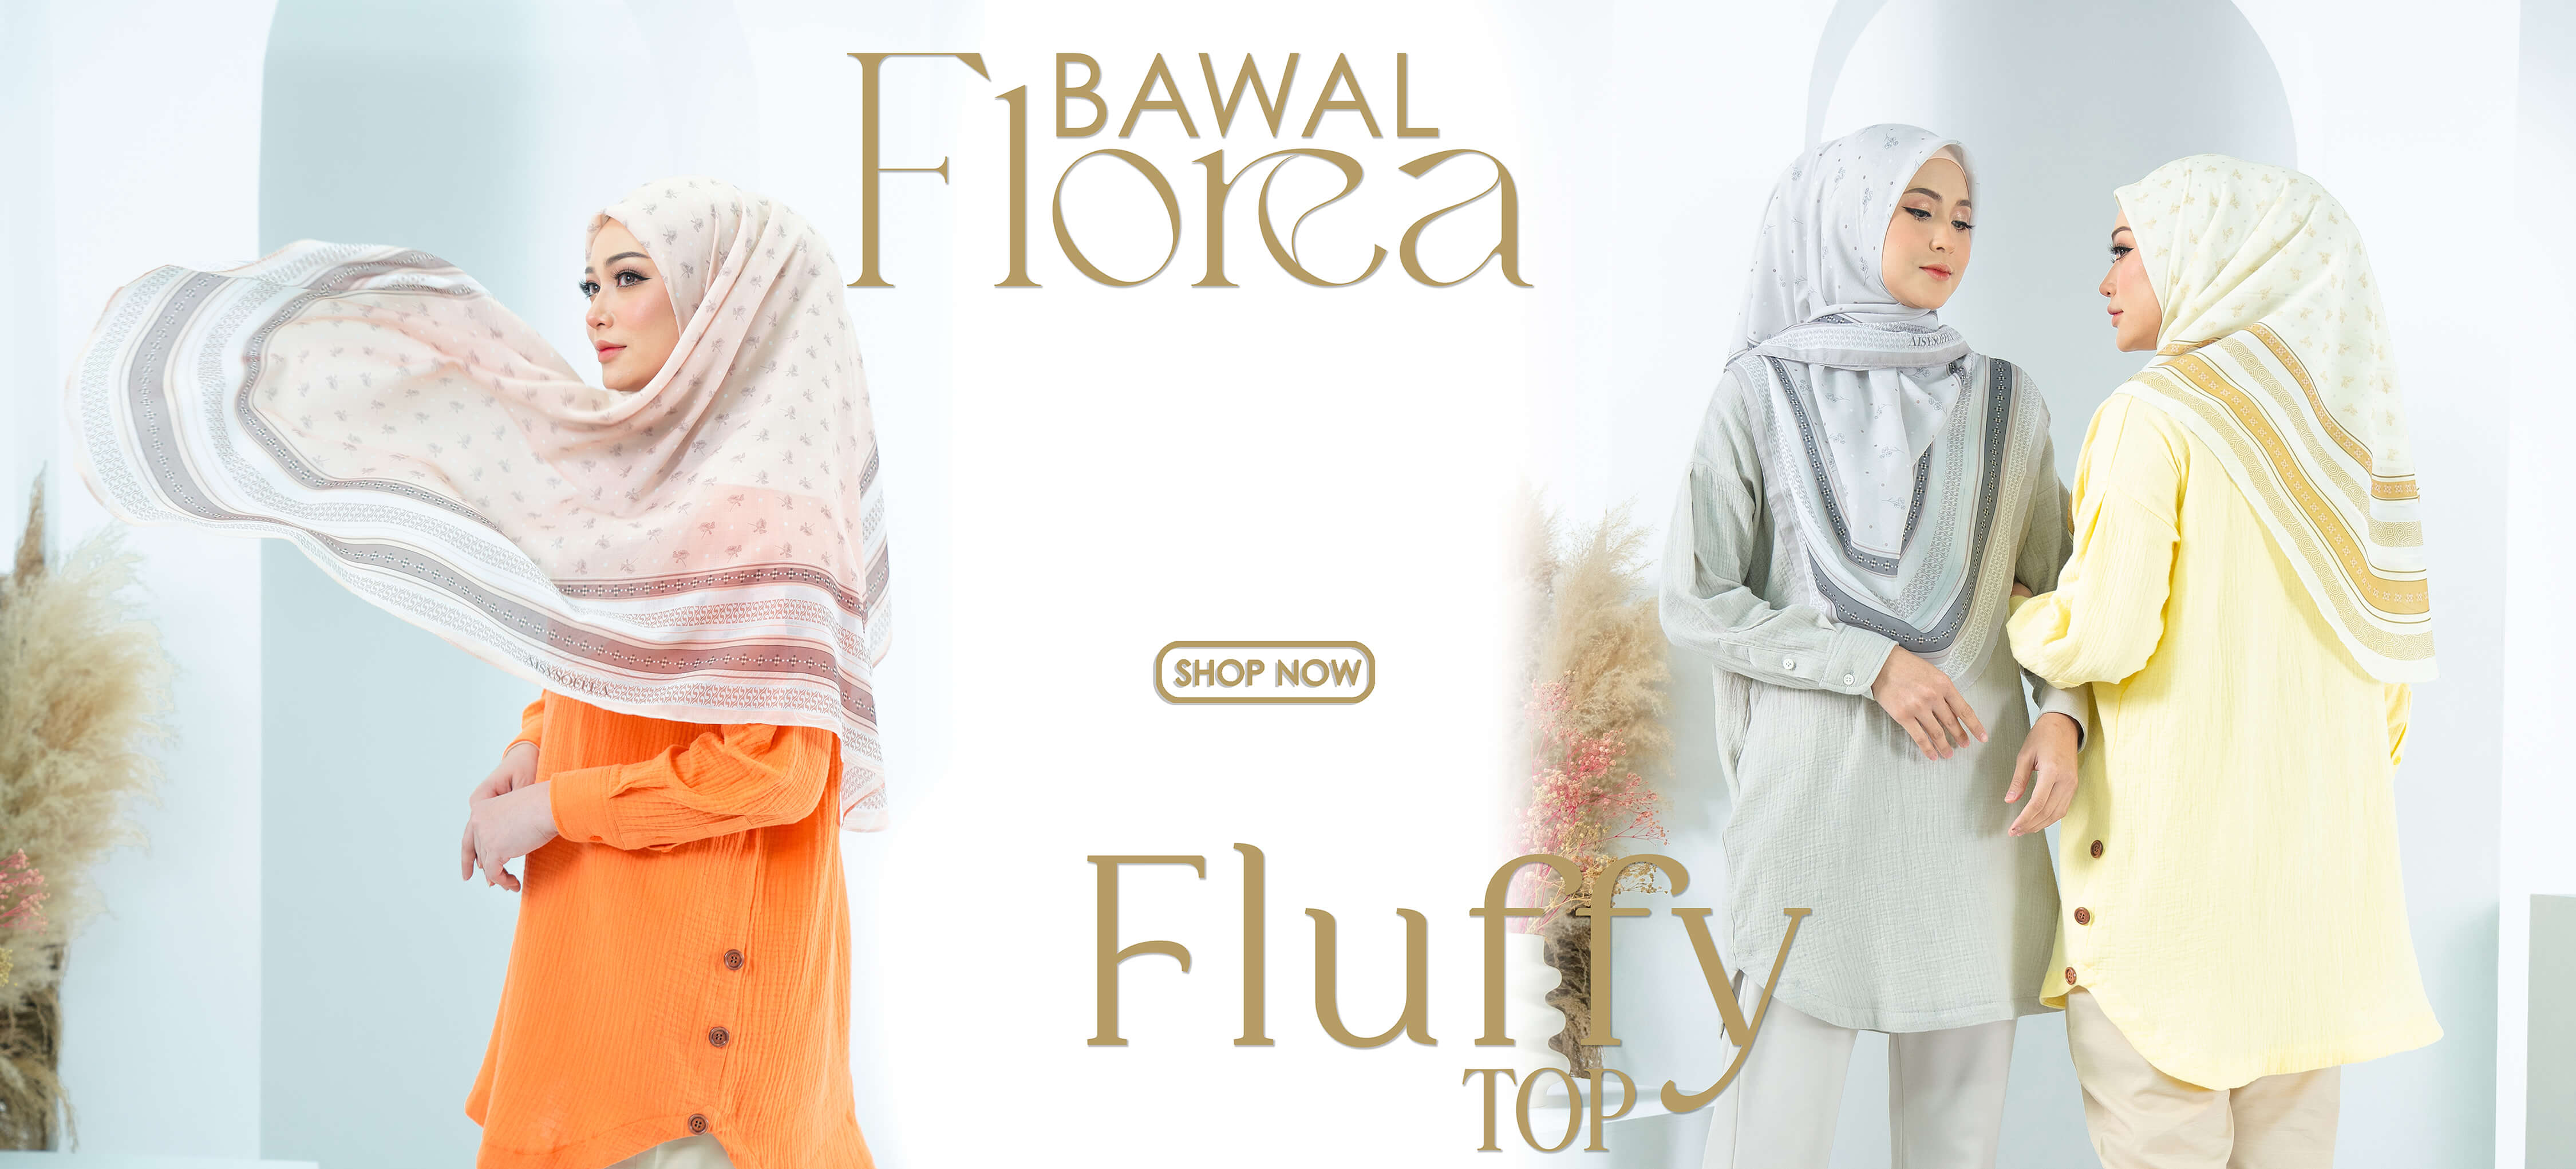 Fluffy Top & Bawal Florea